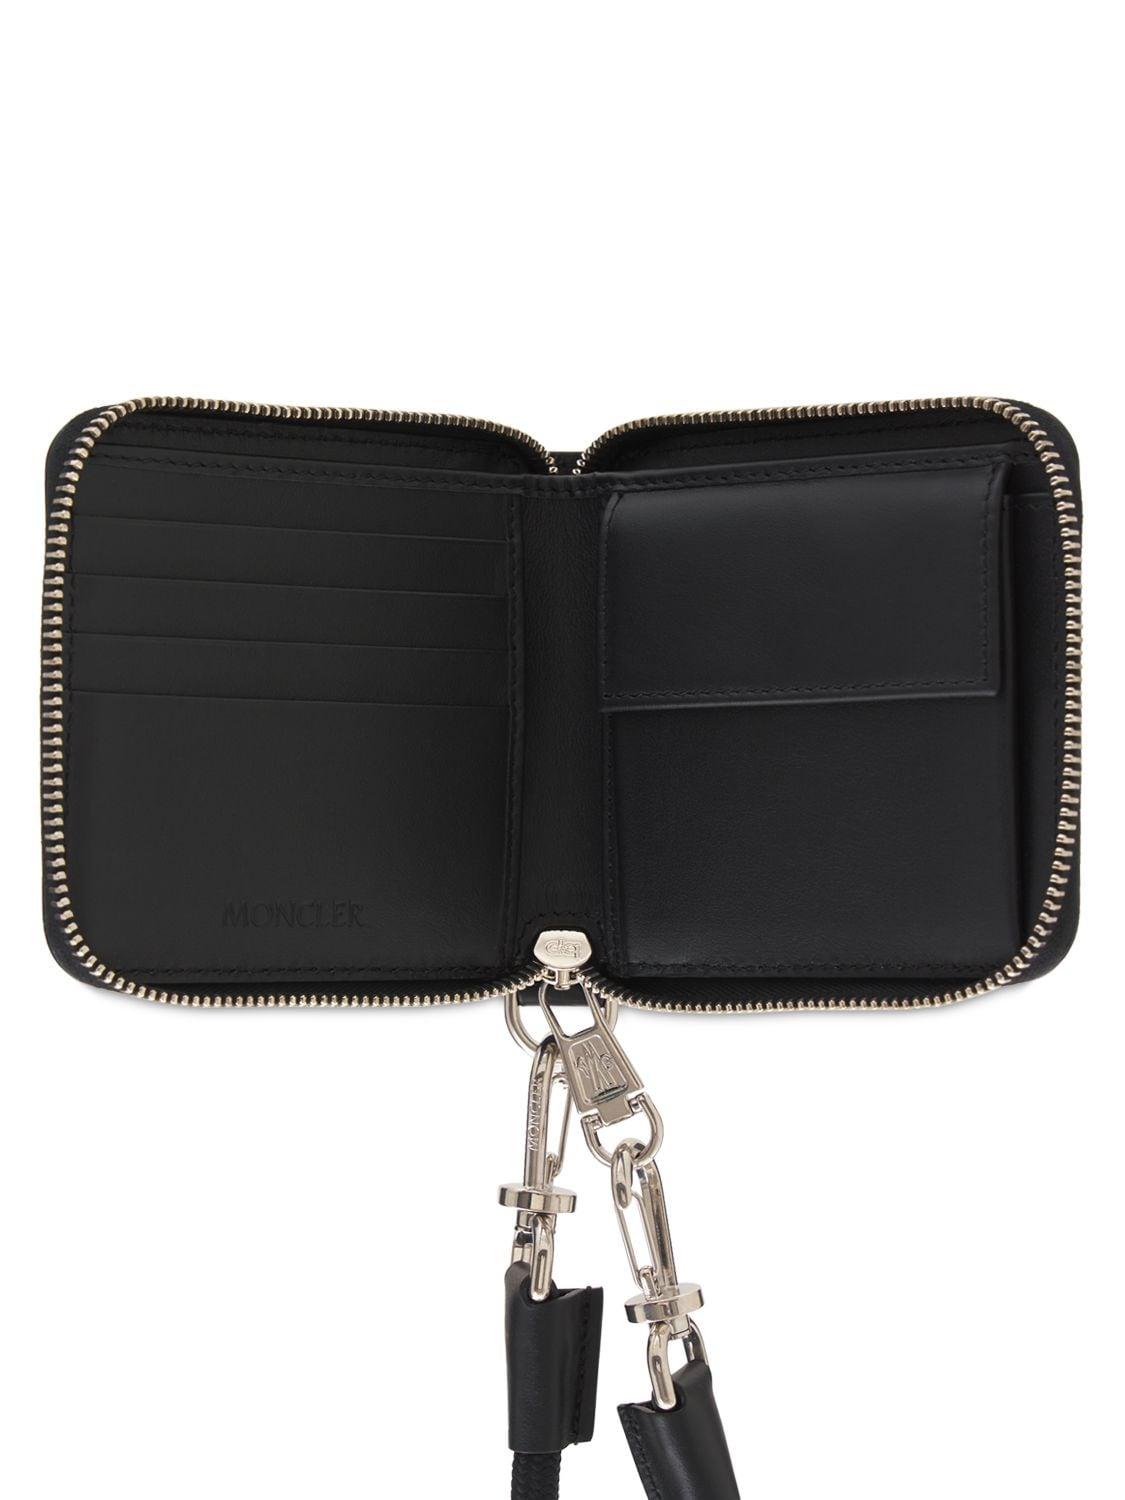 Moncler Square Leather Wallet in Black for Men | Lyst